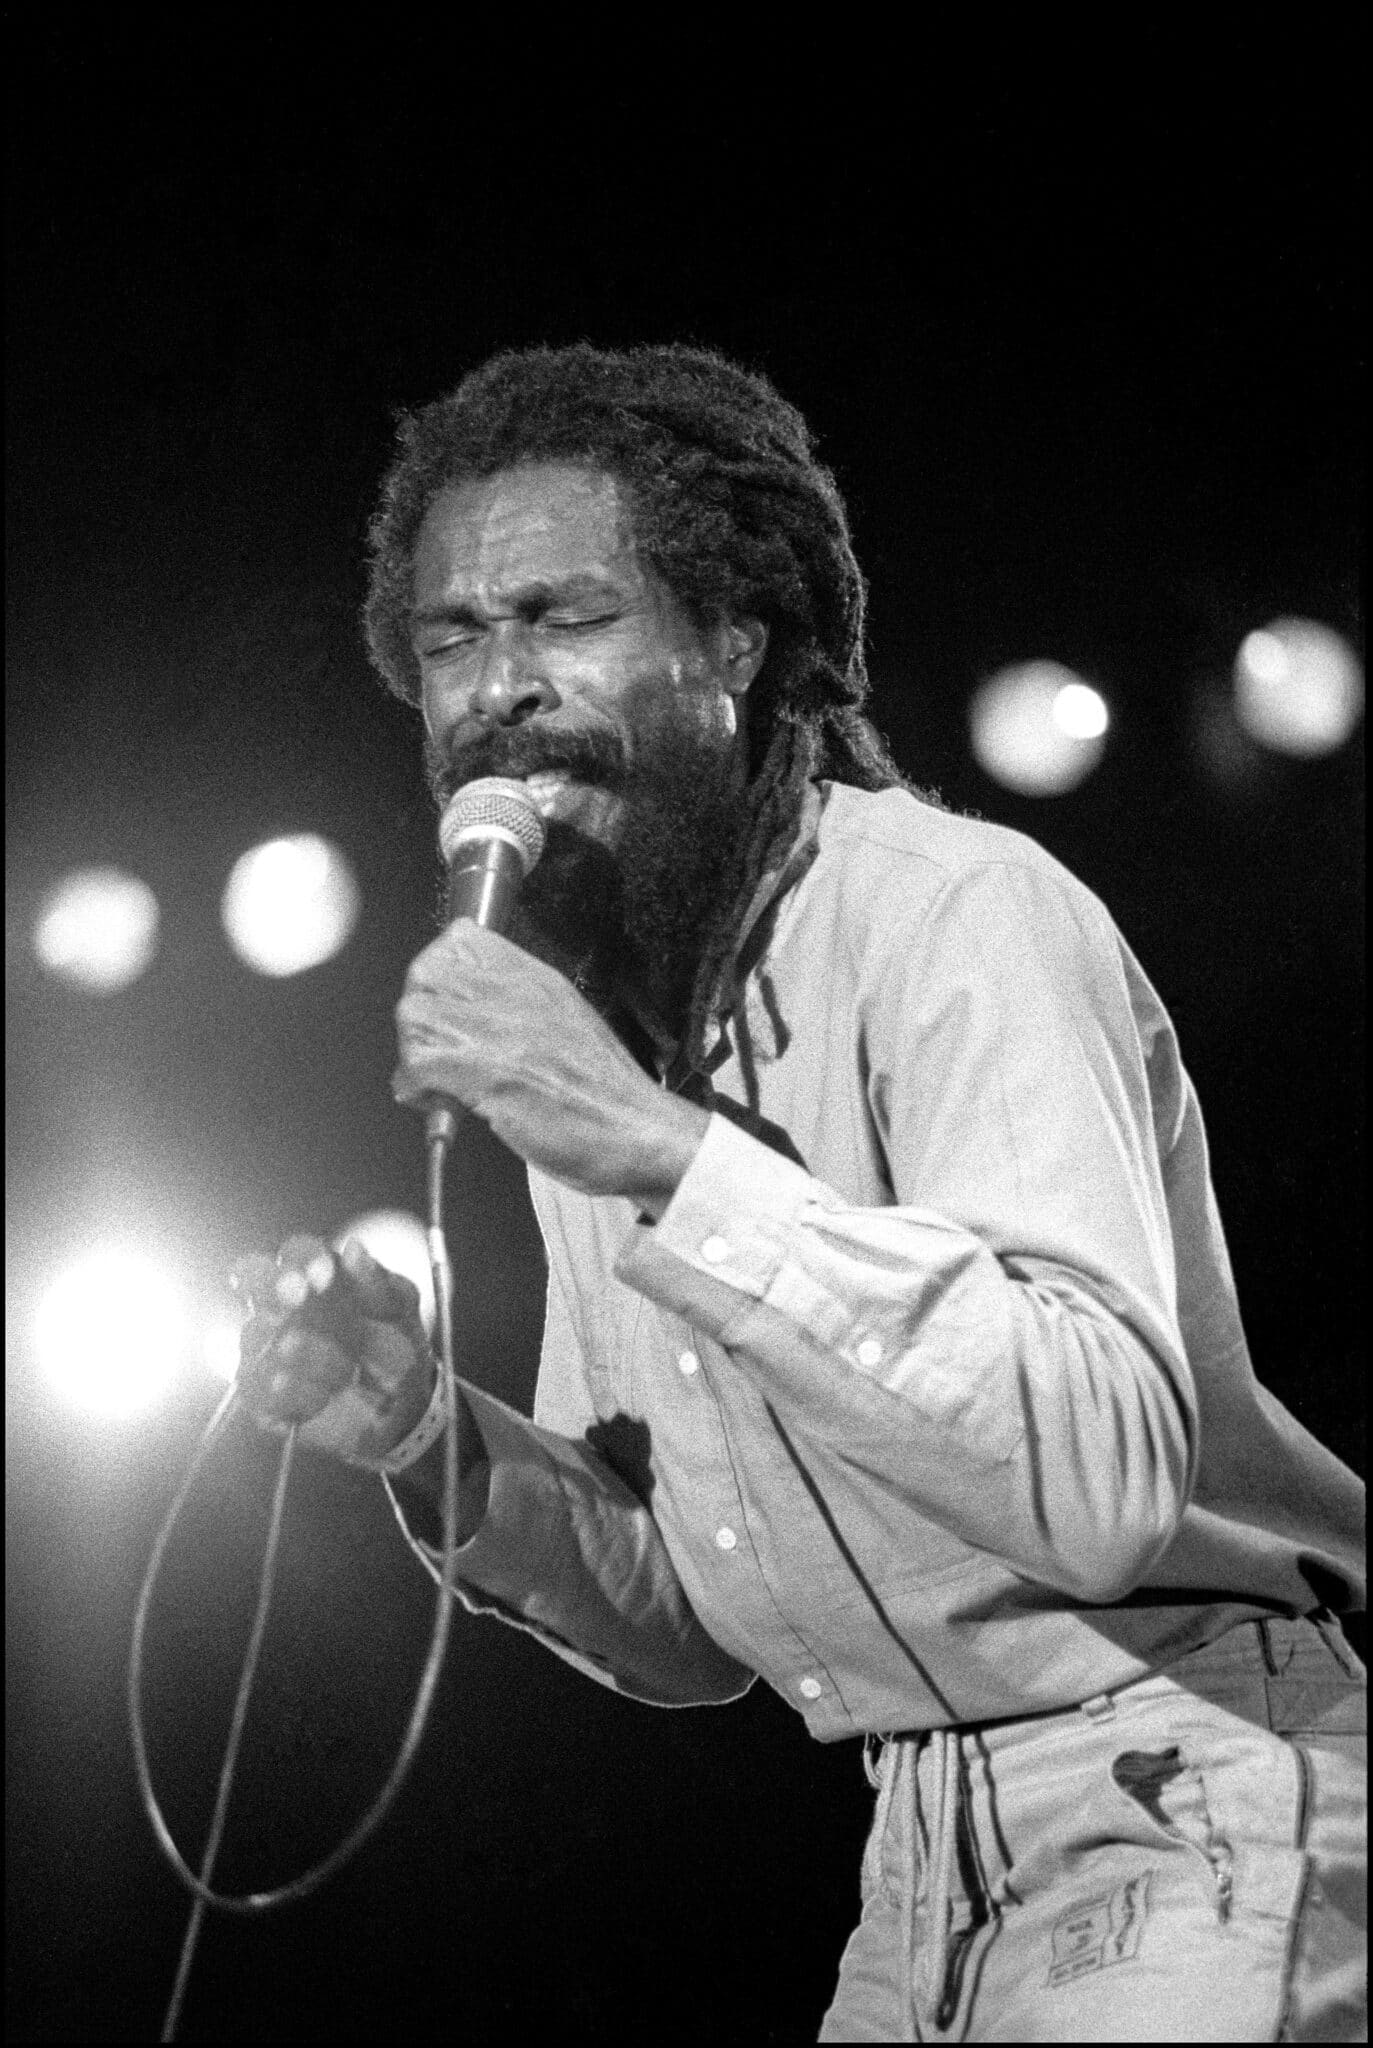 Bob Andy performing at Reggae Sunsplash, Montego Bay, Jamaica 11 August 1984